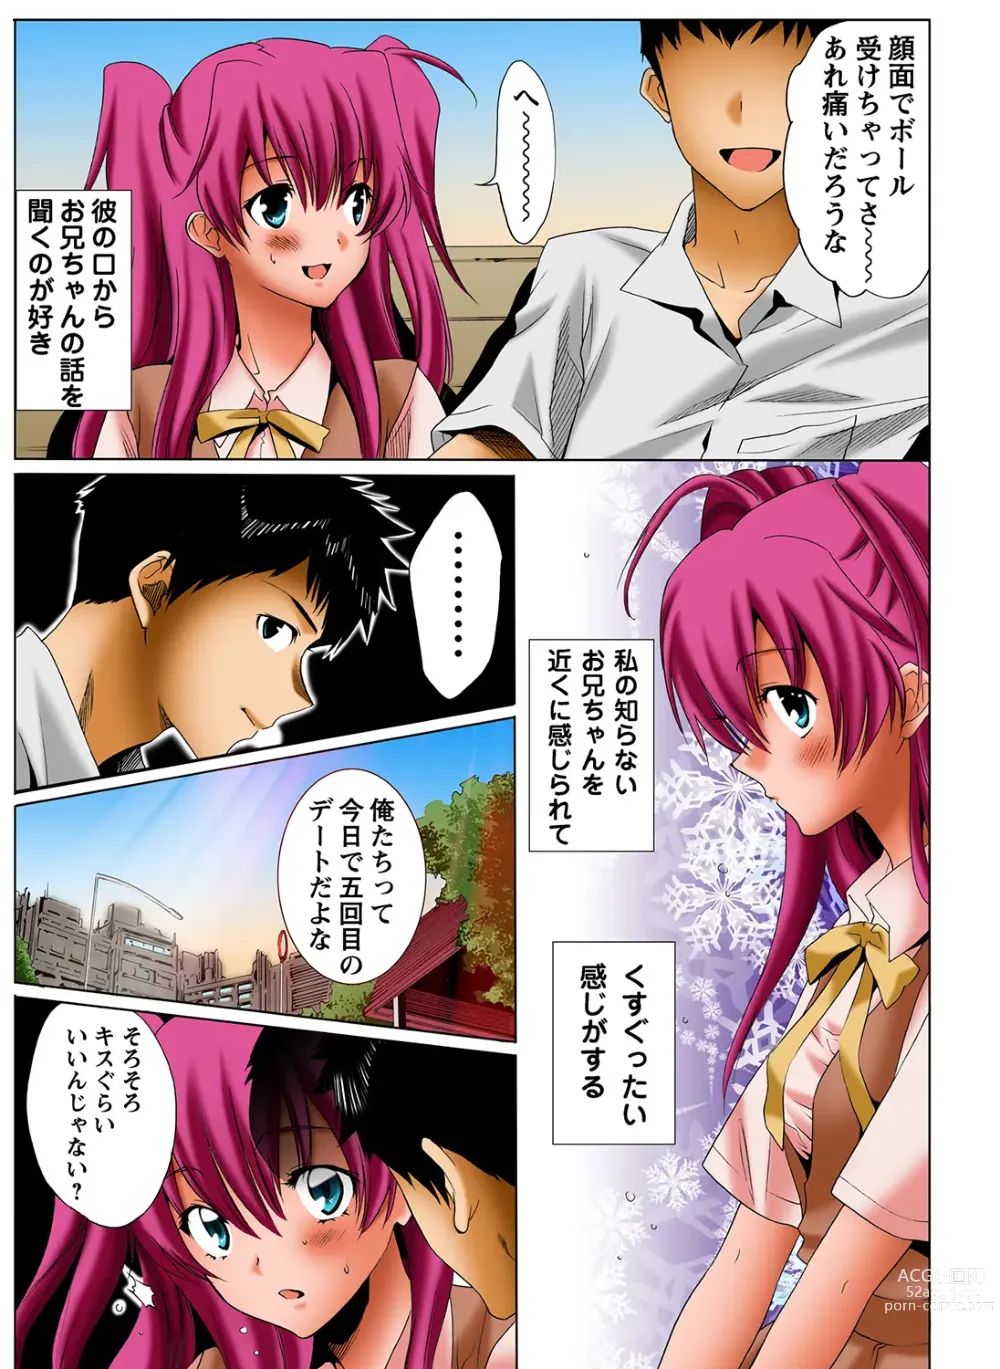 Page 104 of manga HiME-Mania Vol. 35